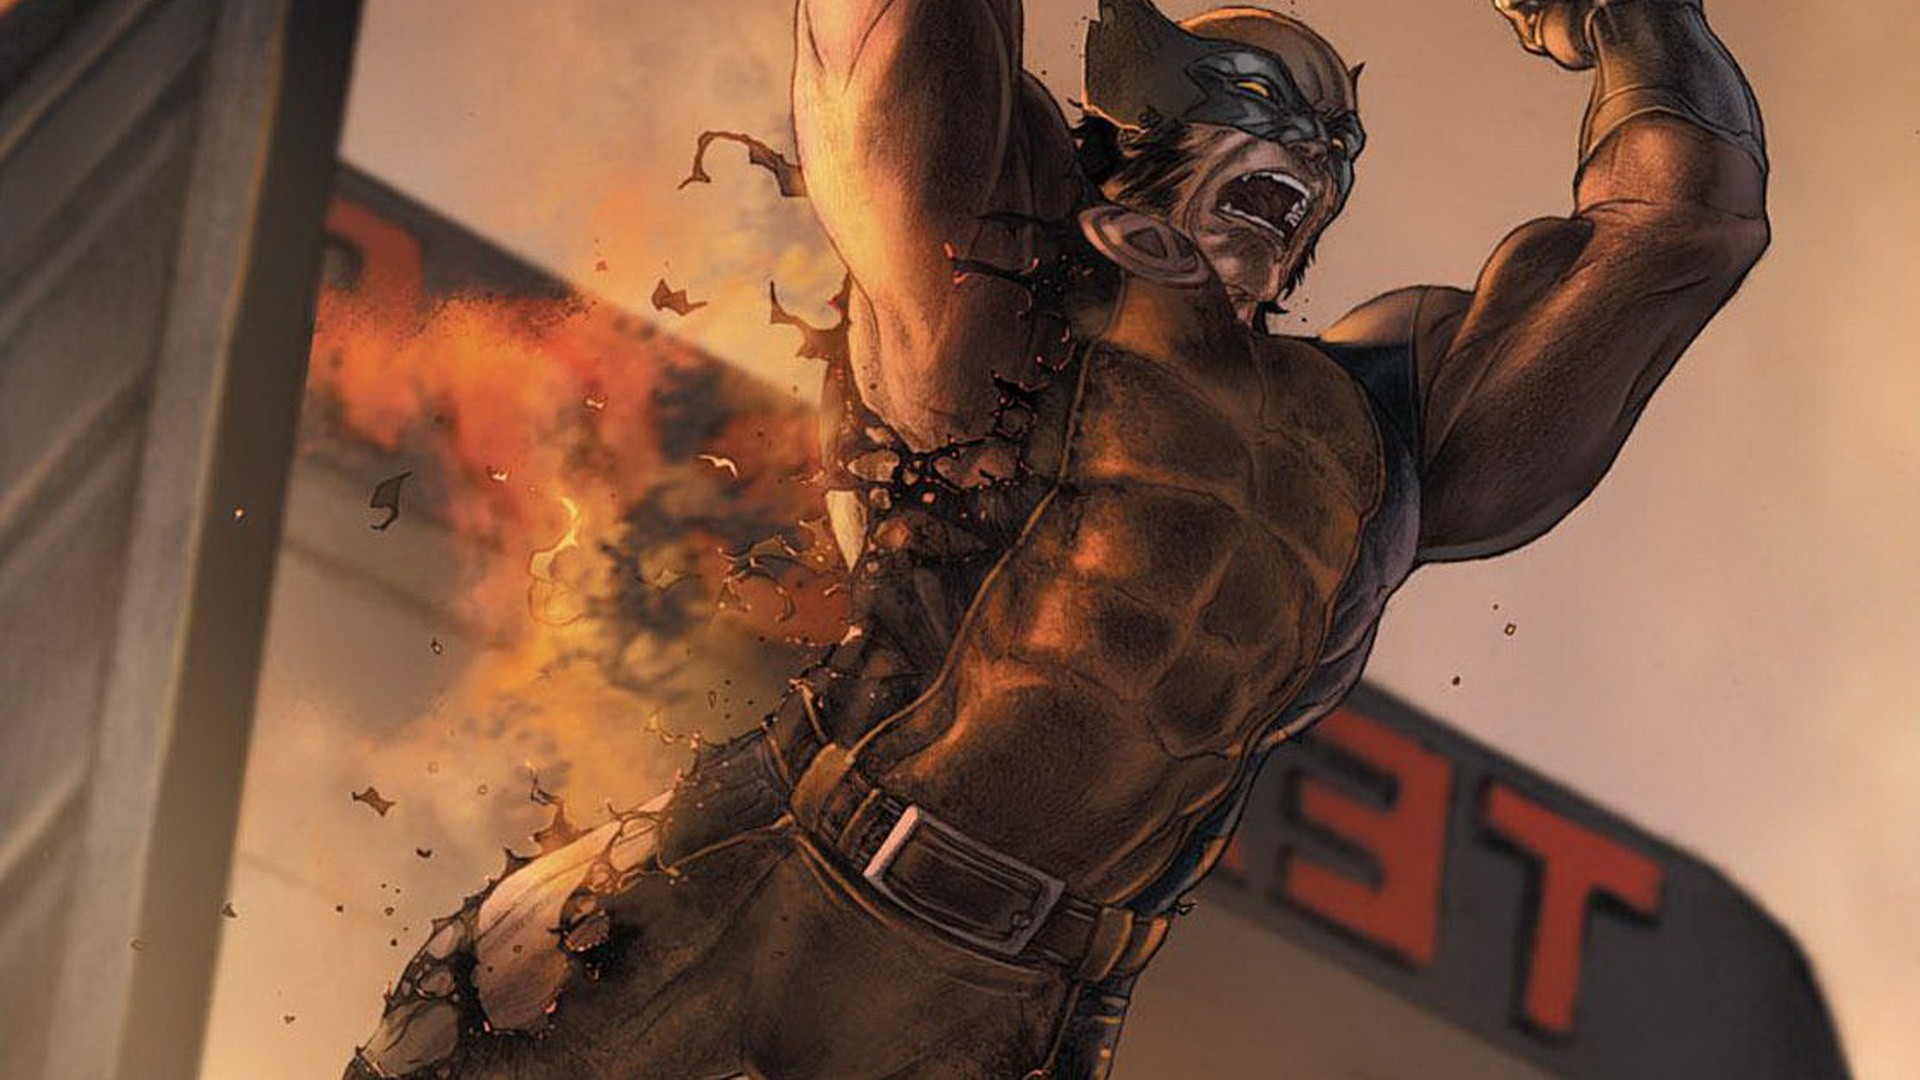 1920x1080 wallpaper uniforms Â· comics Â· X-Men Â· Wolverine